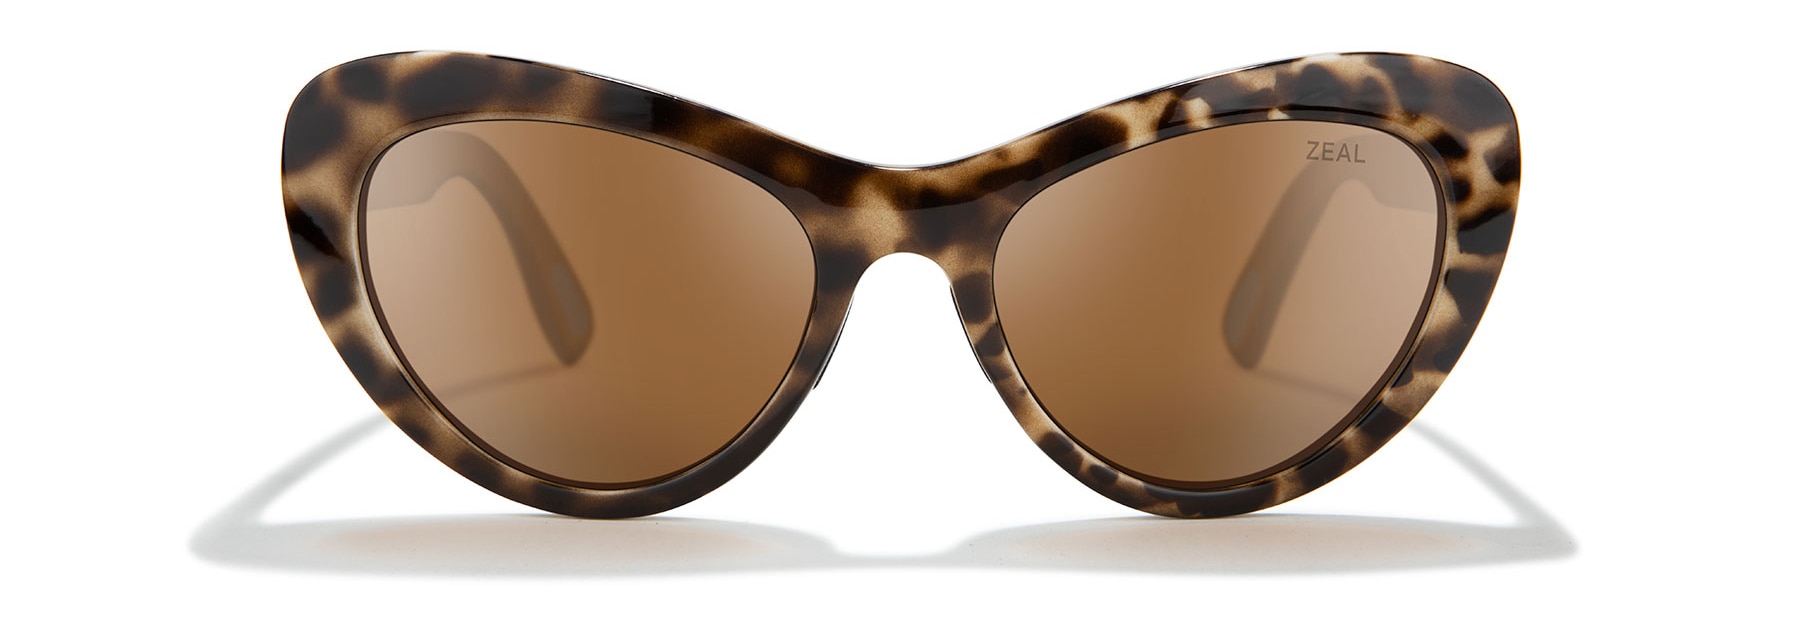 Chanel Sunglasses - Cat Eyes - 5416